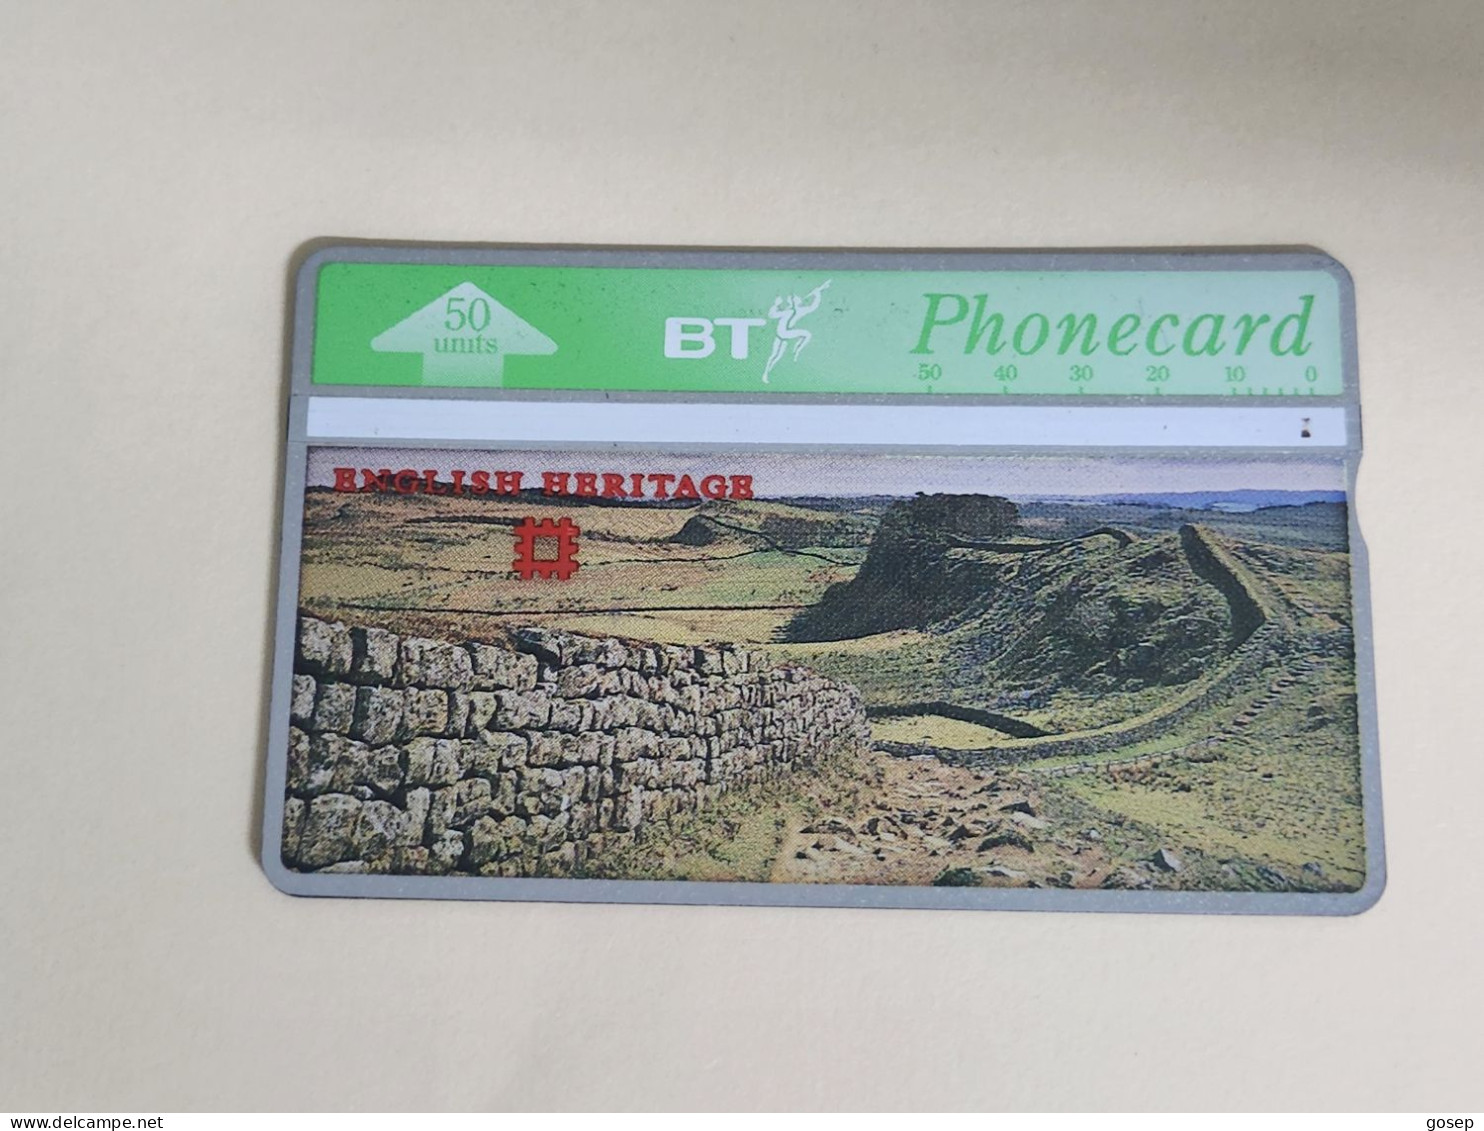 United Kingdom-(BTA107)-HERITAGE-Hadrian's Wall-(181)(50units)(528E62834)price Cataloge3.00£-used+1card Prepiad Free - BT Emissioni Pubblicitarie